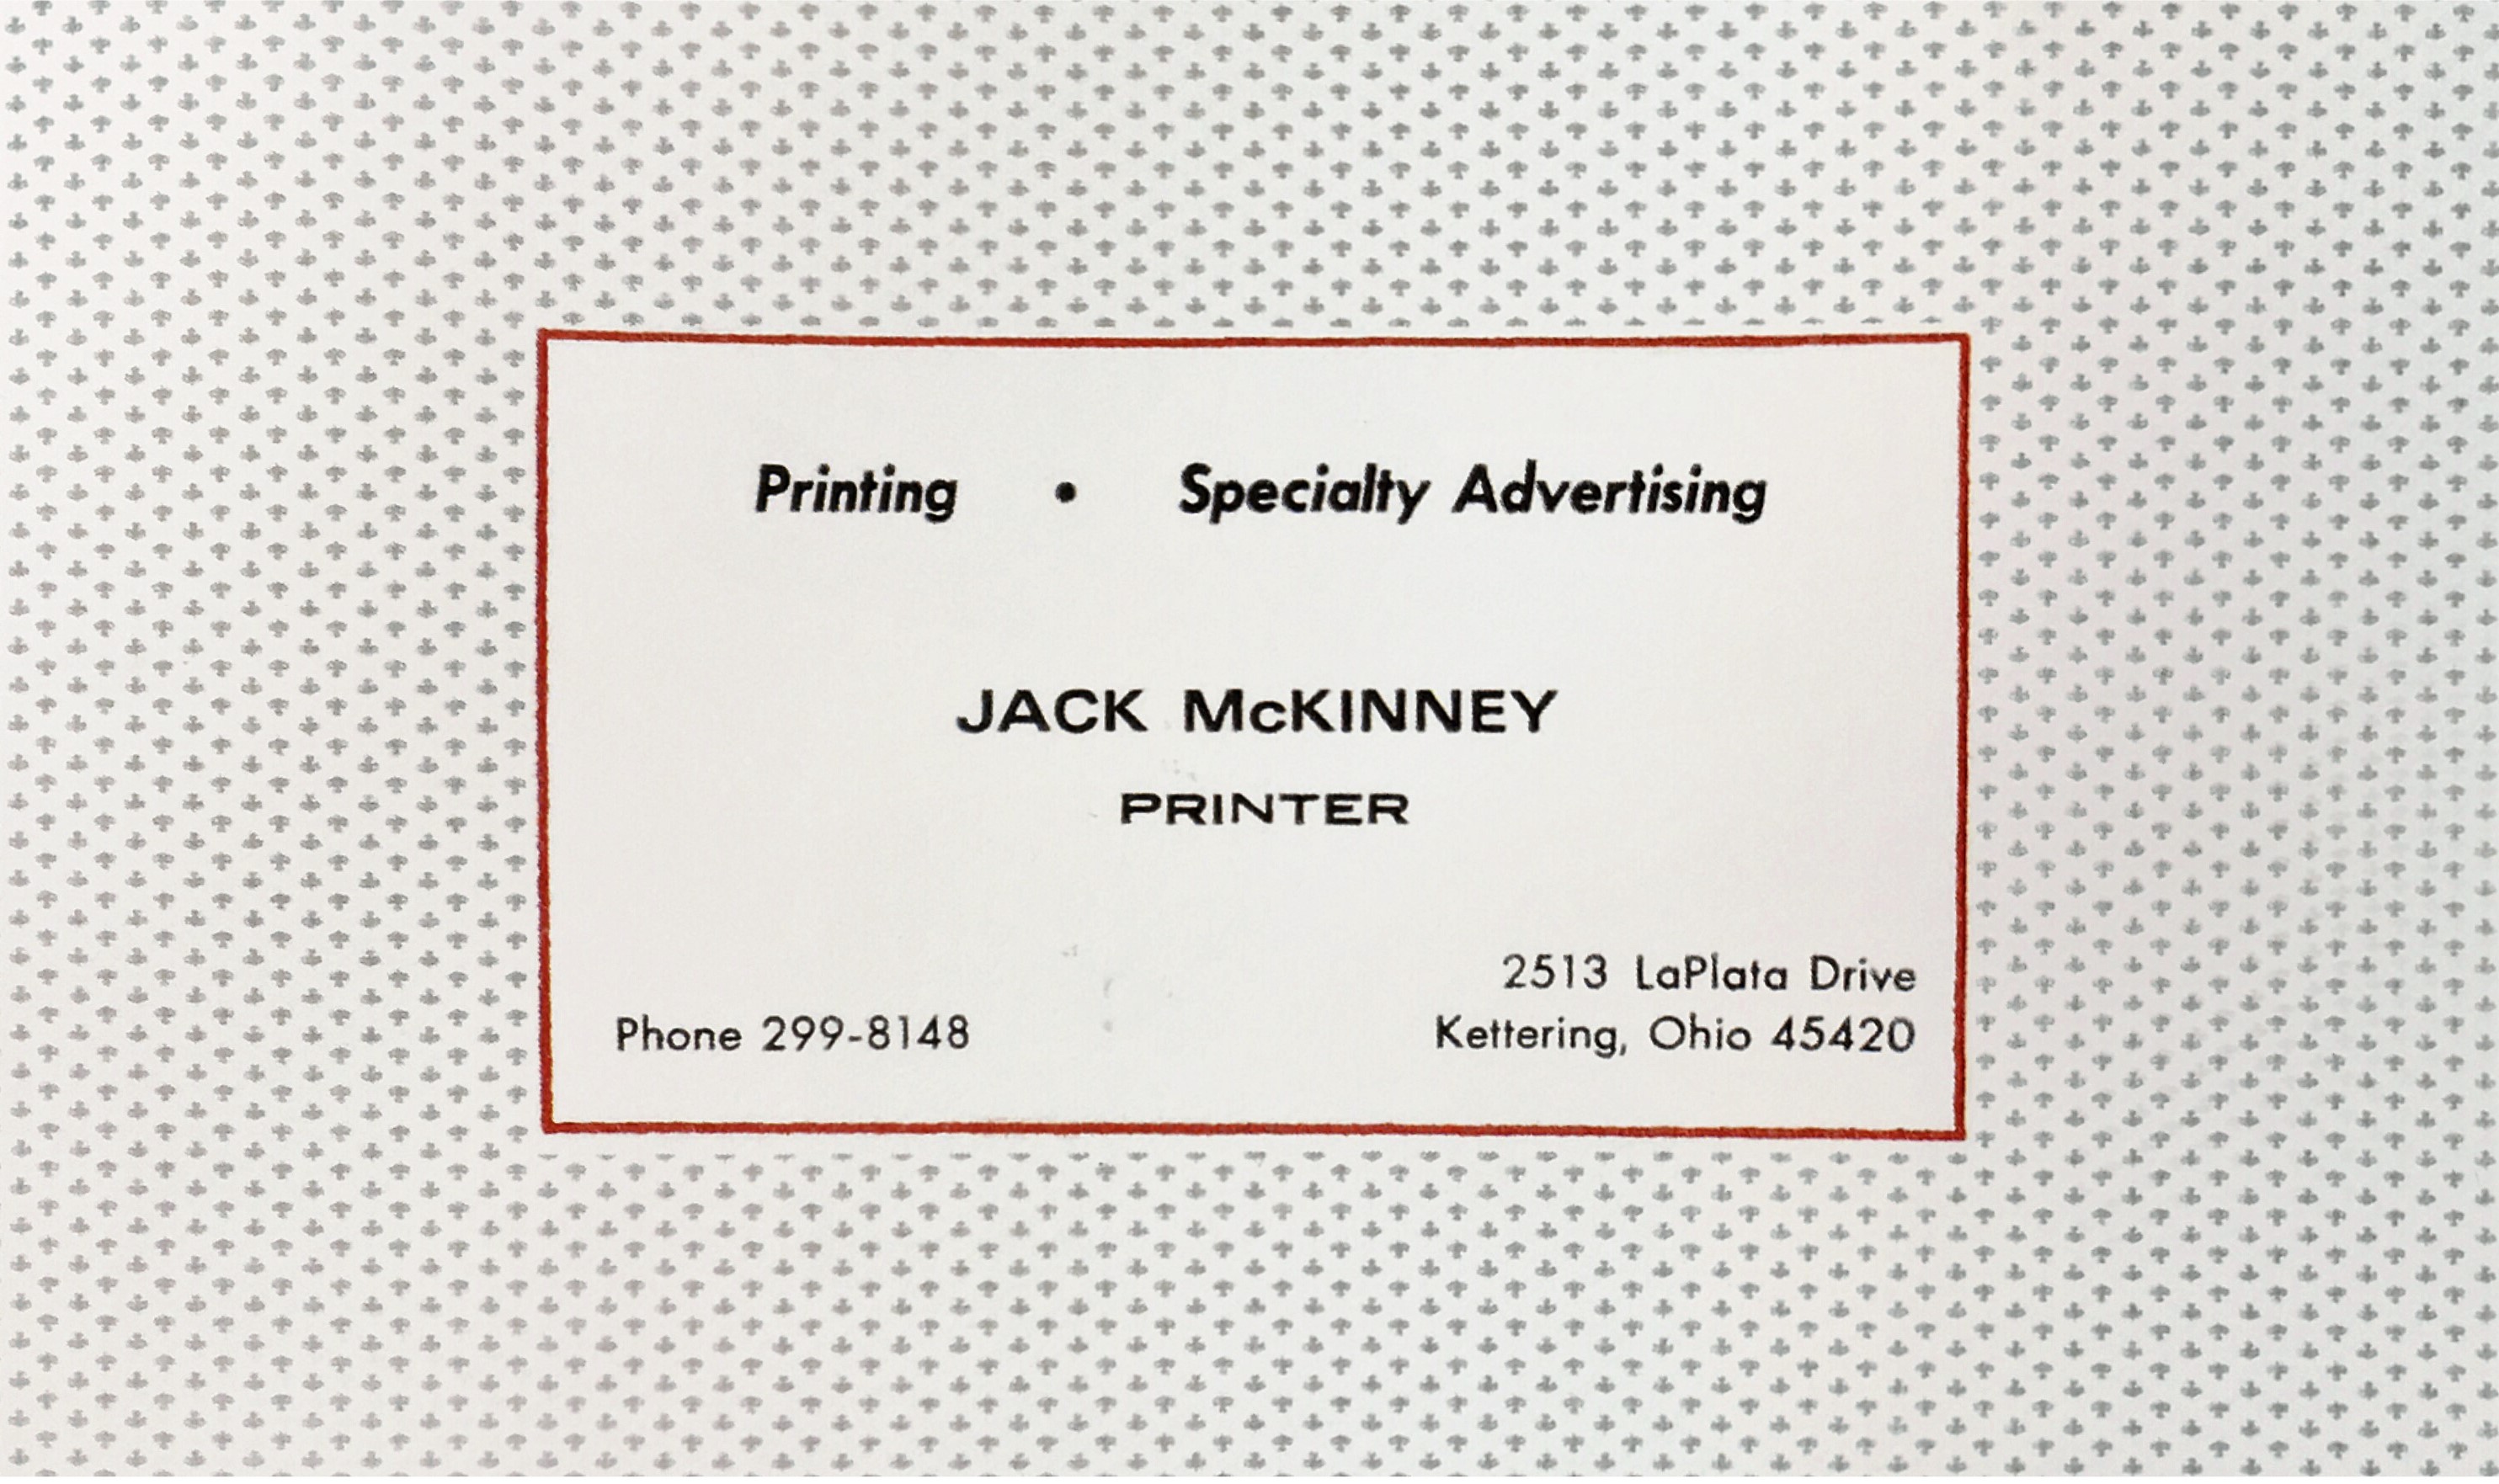 John (Jack) McKinney, Jr.’s card